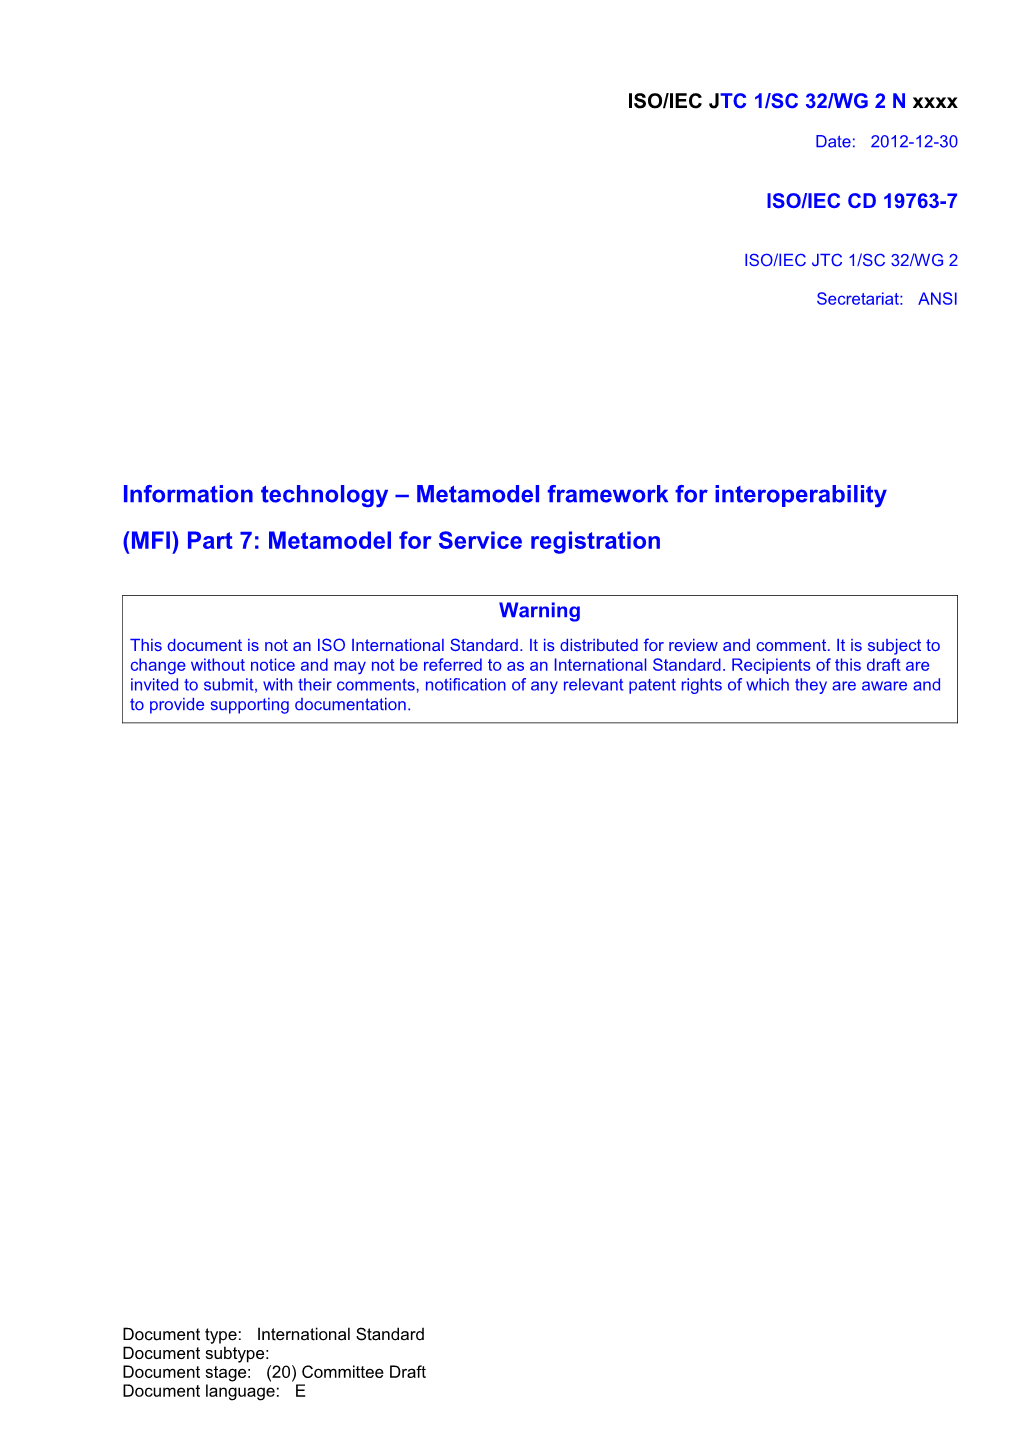 Information Technology Metamodel Framework for Interoperability